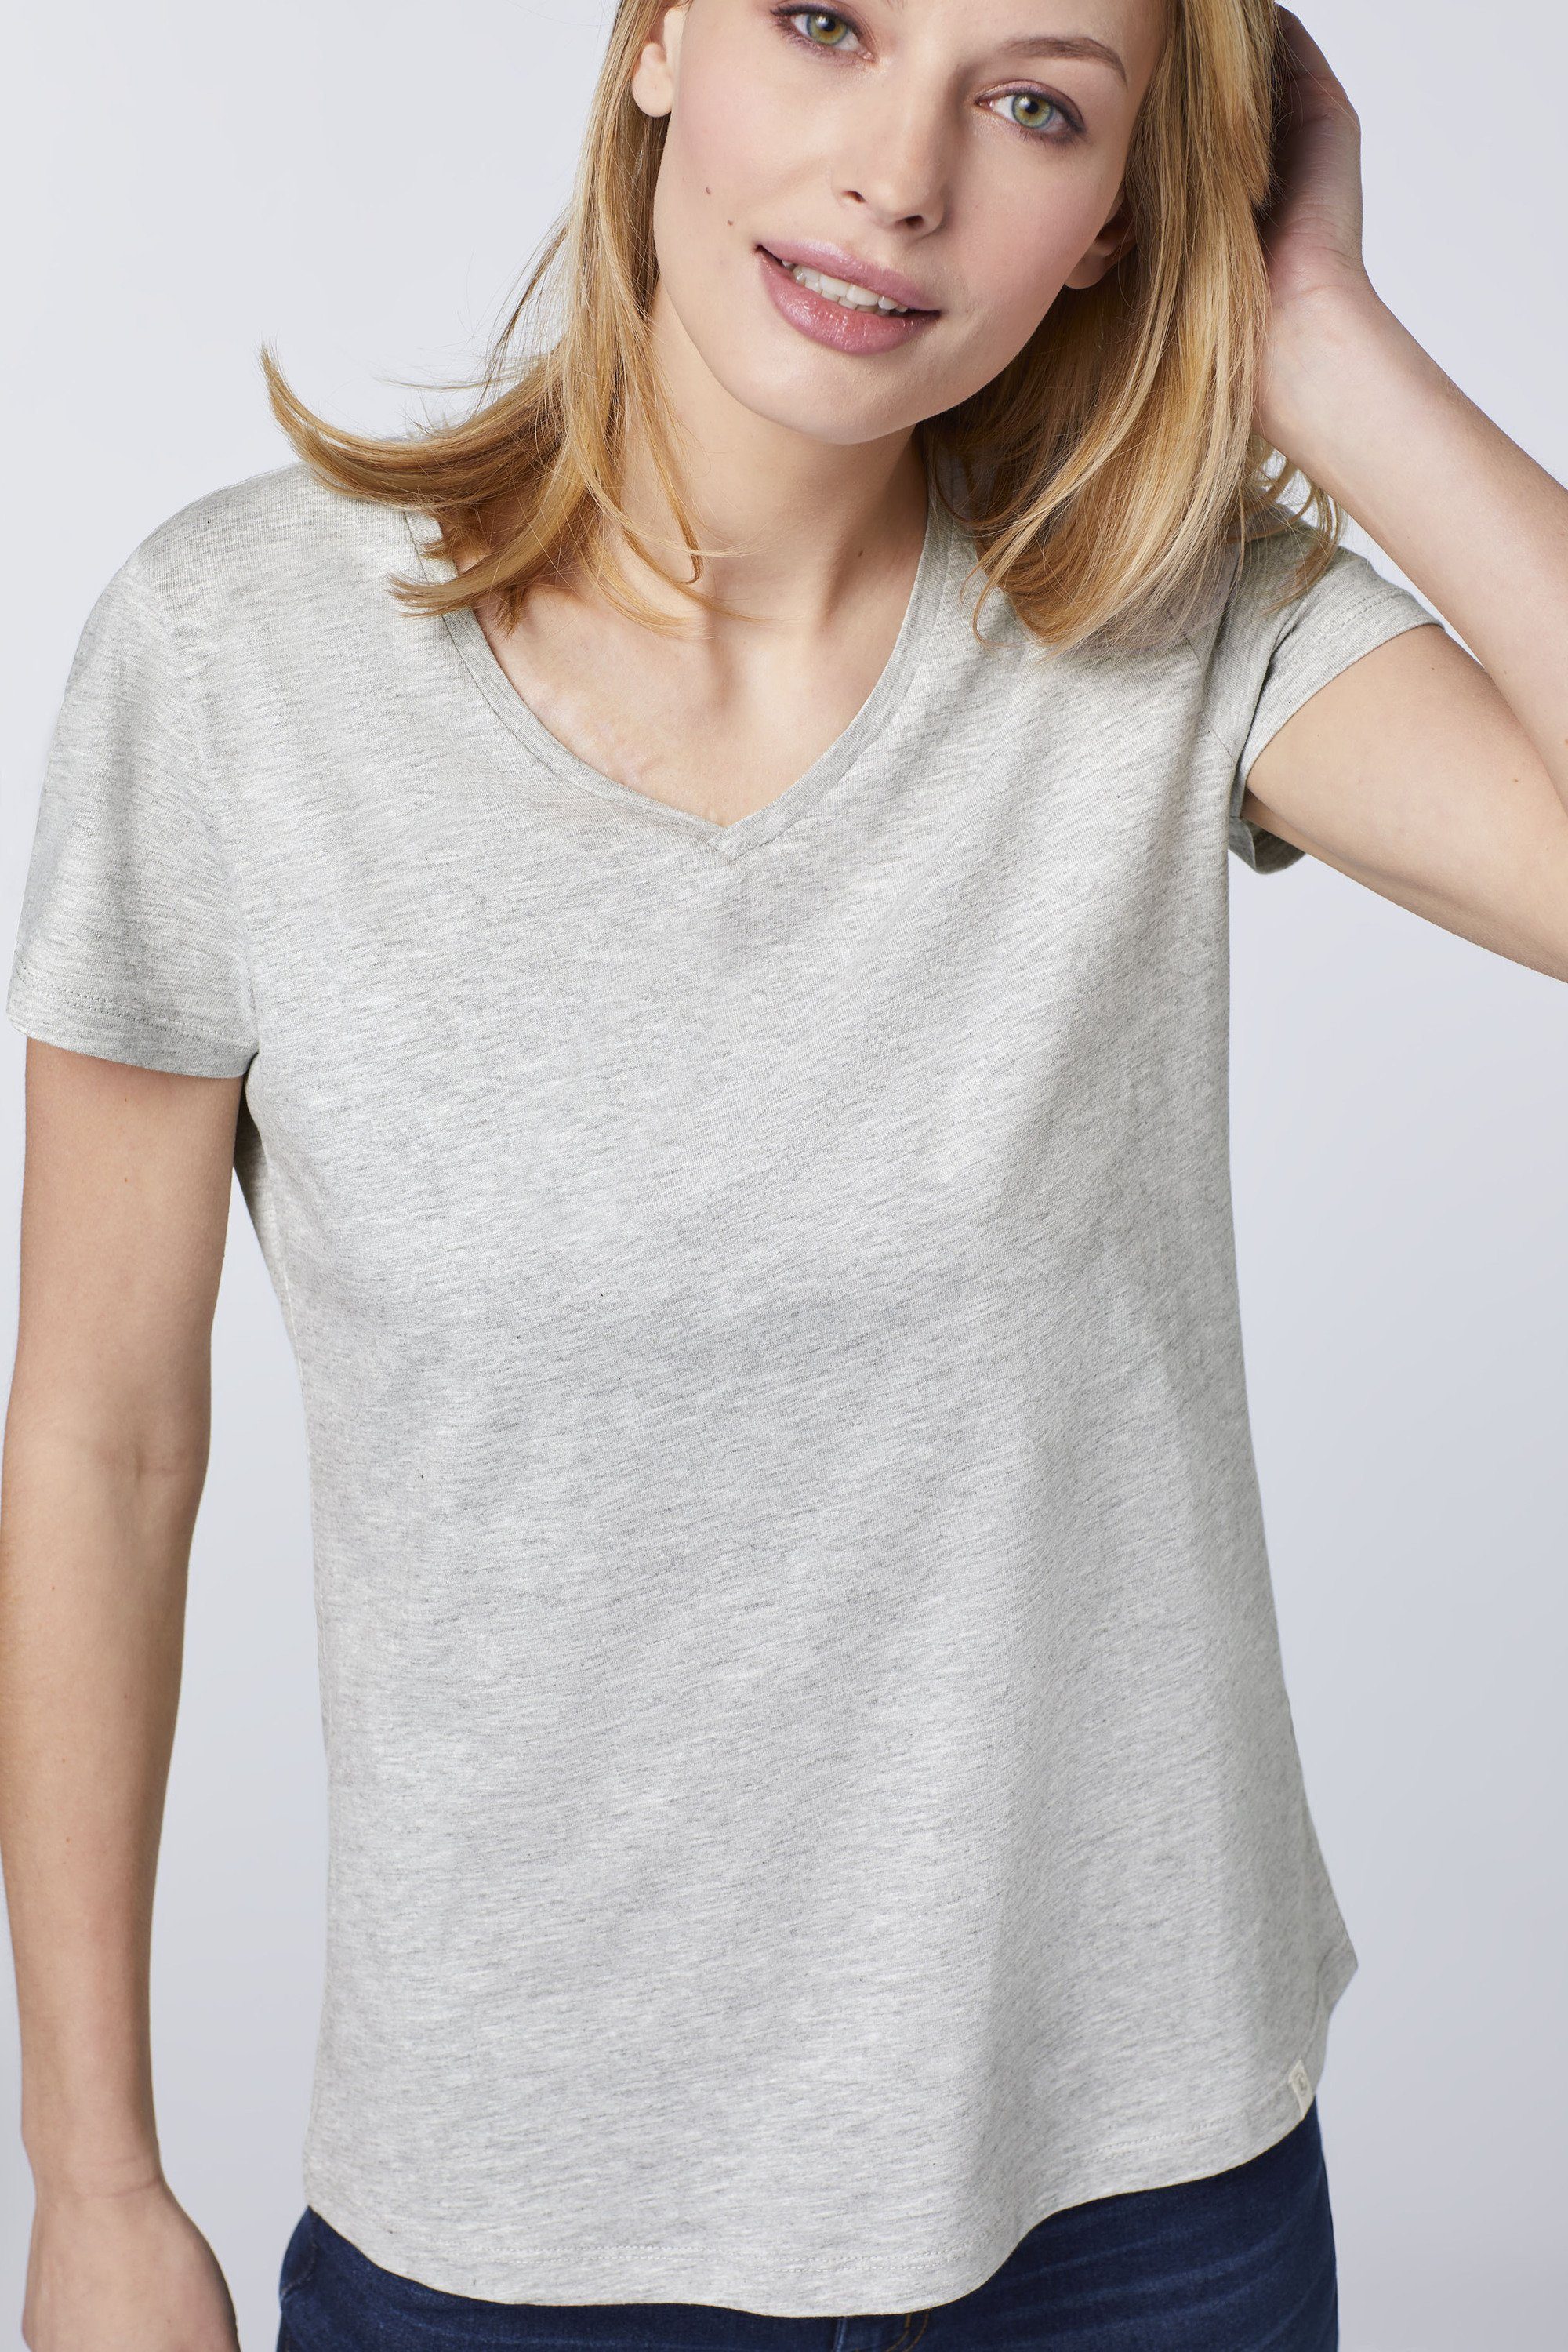 Grey Light im Detto V-Neck-Design T-Shirt femininen Fatto 72